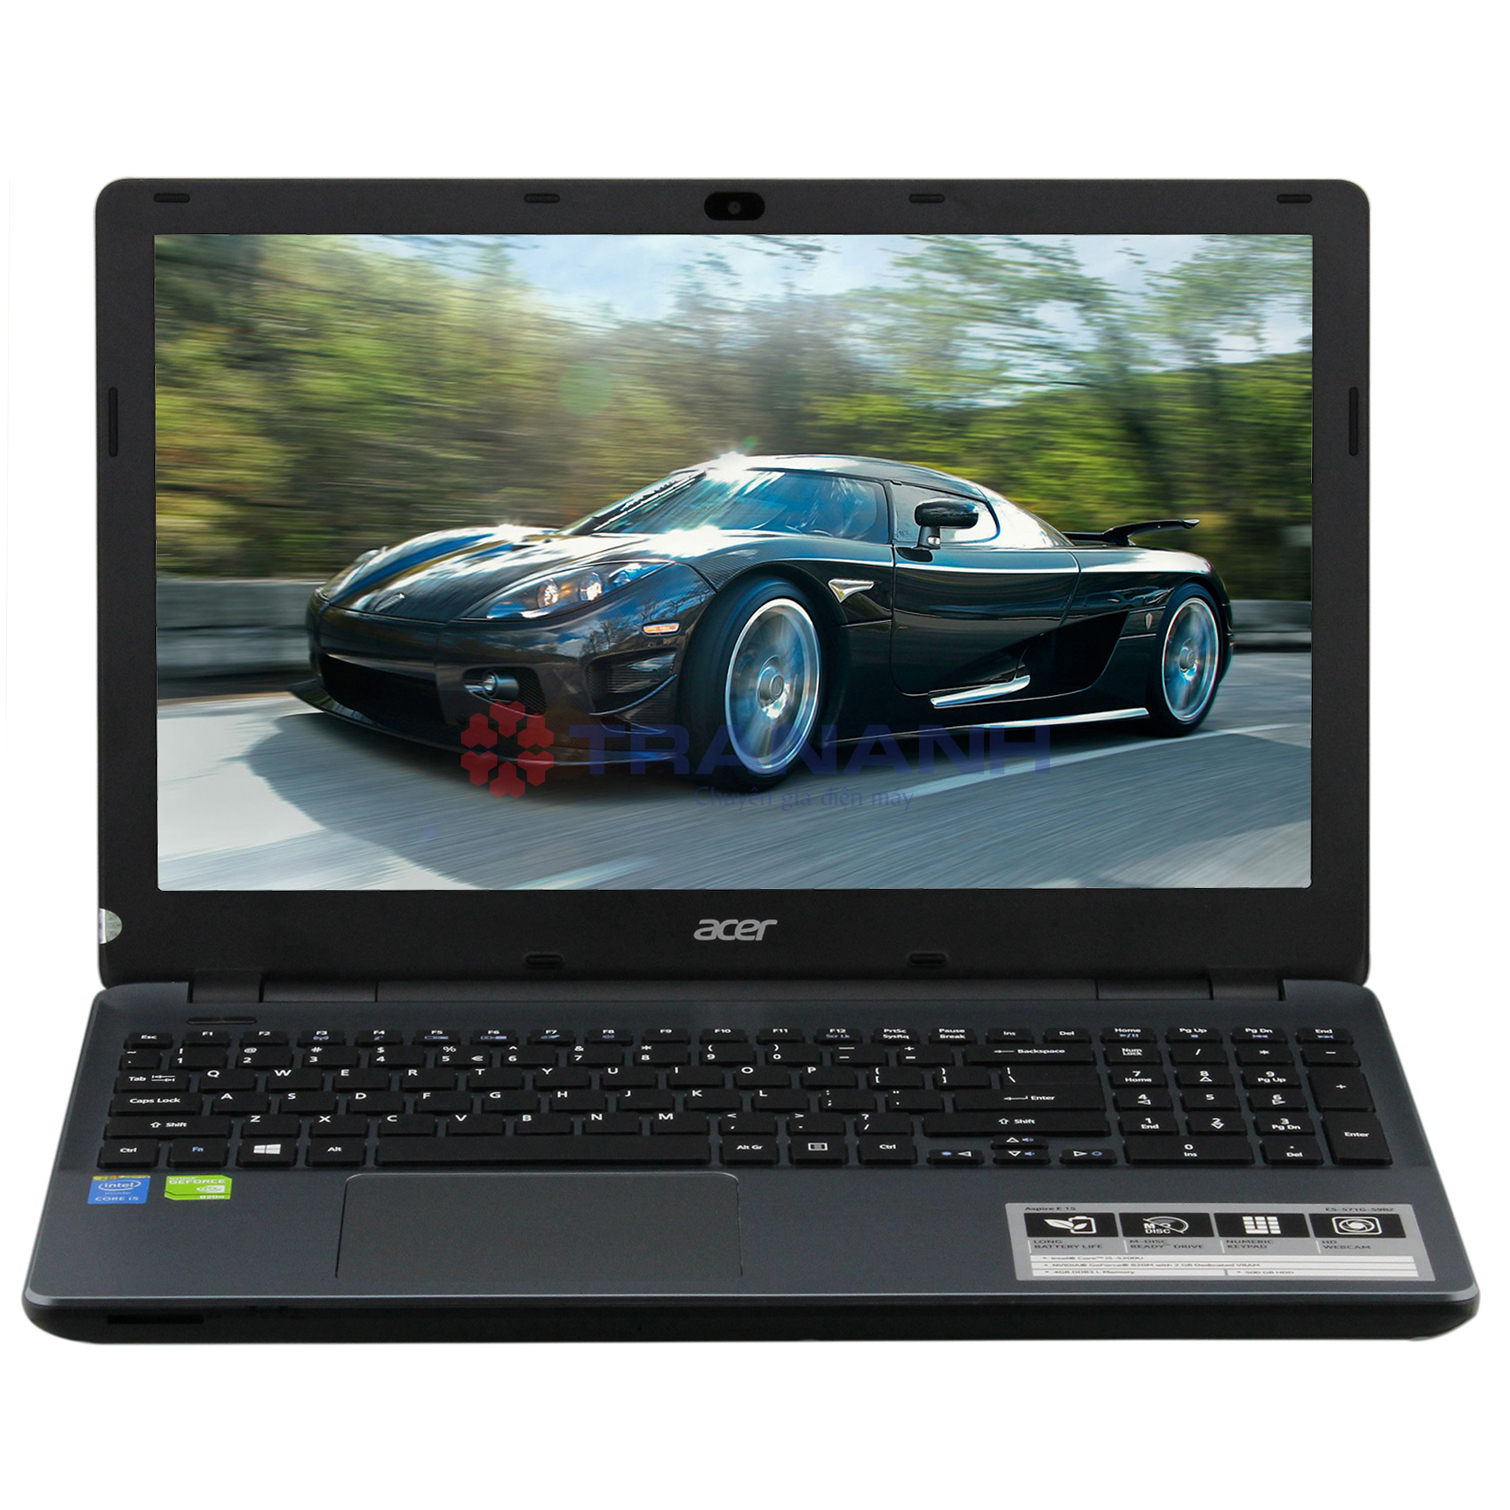 Laptop Acer E5-571G-59BZ - Intel Core  i5 Broadwell 5200U 2.2Ghz, 4GB RAM, 500GB HDD, Nvidia GeForce 820M 2Gb, 15.6 inch